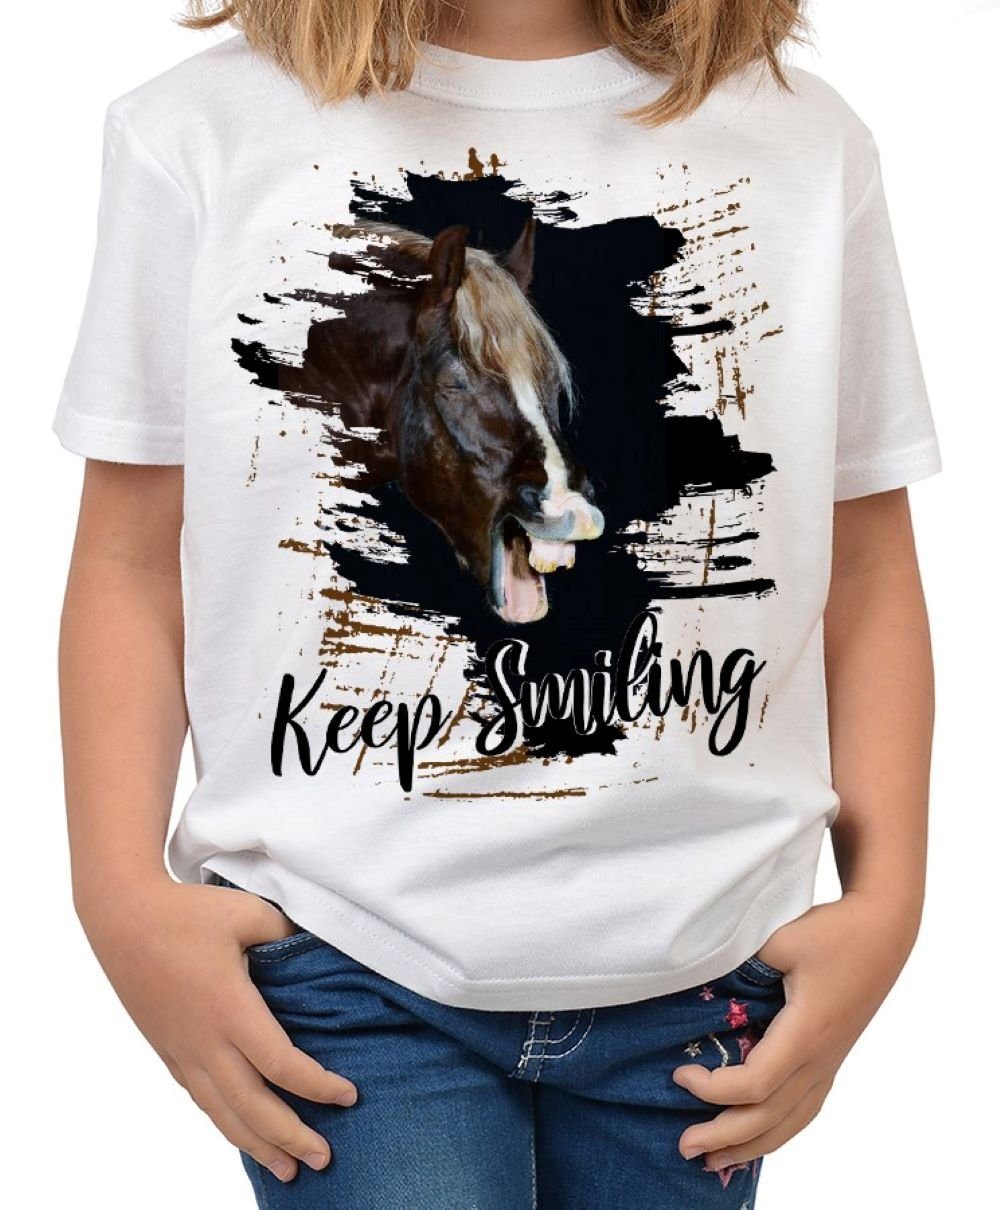 Tini - Shirts T-Shirt Kinder Pferde Motiv Tshirt Lachendes Kaltblut Pferd Kindershirt : Keep Smiling